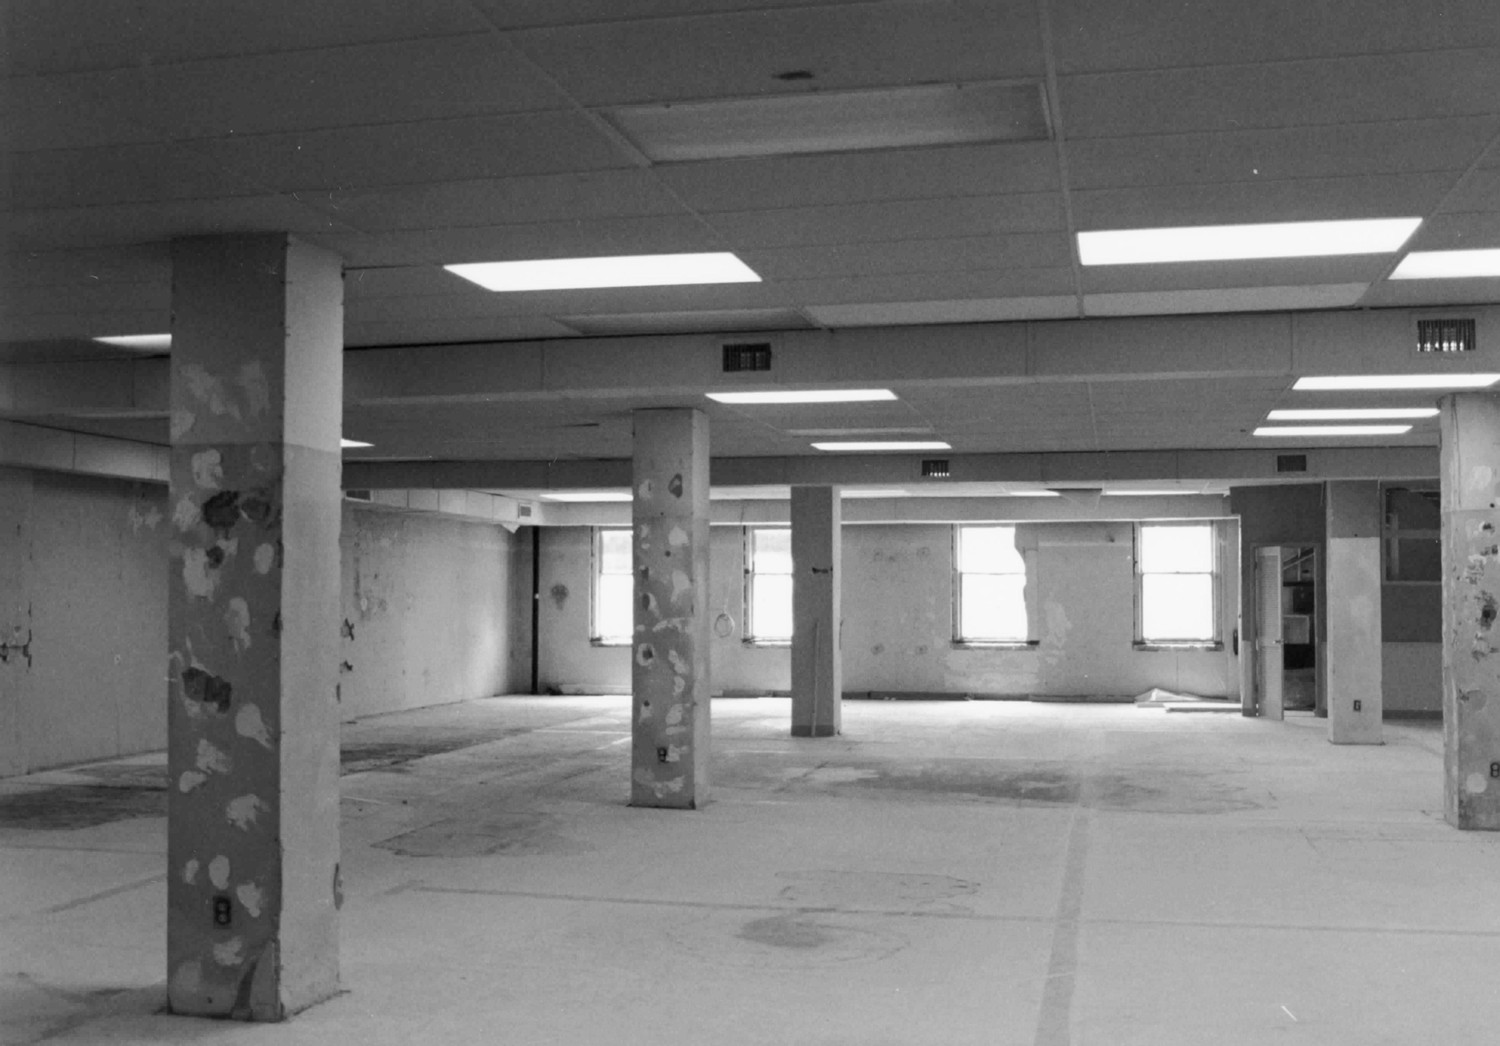 Belk-Hudsons Department Store - Fowlers Store, Huntsville Alabama Floor 2, northwest building, looking west to Washington Street (1995)